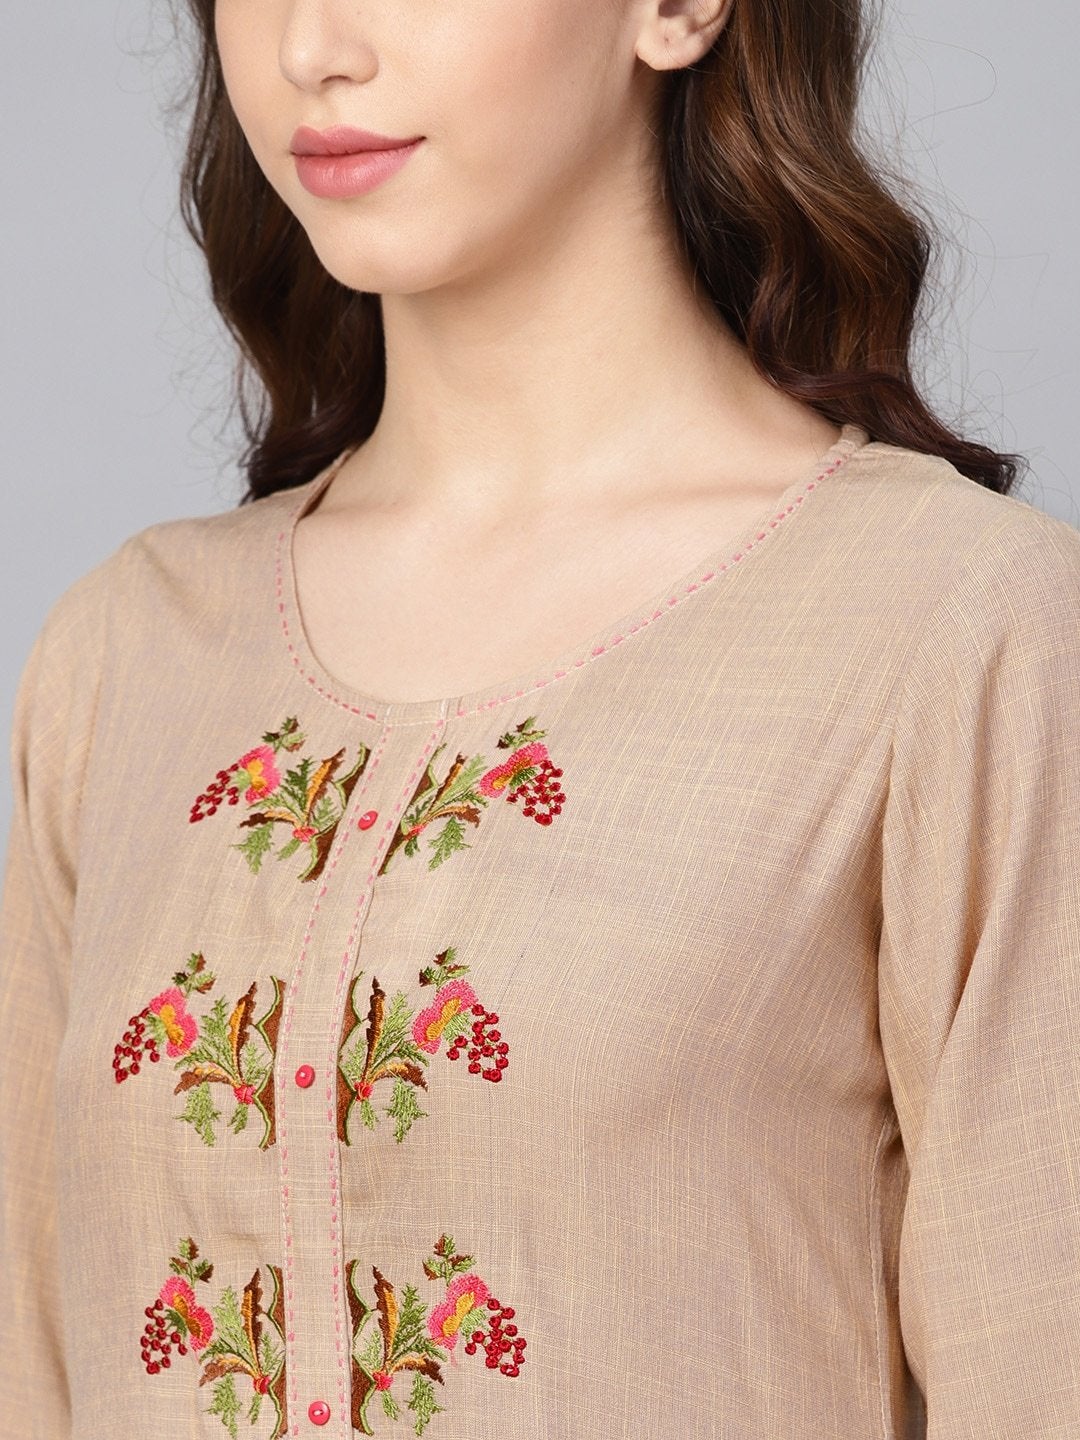 Women's Beige Floral Embroidered Straight Kurta - Meeranshi